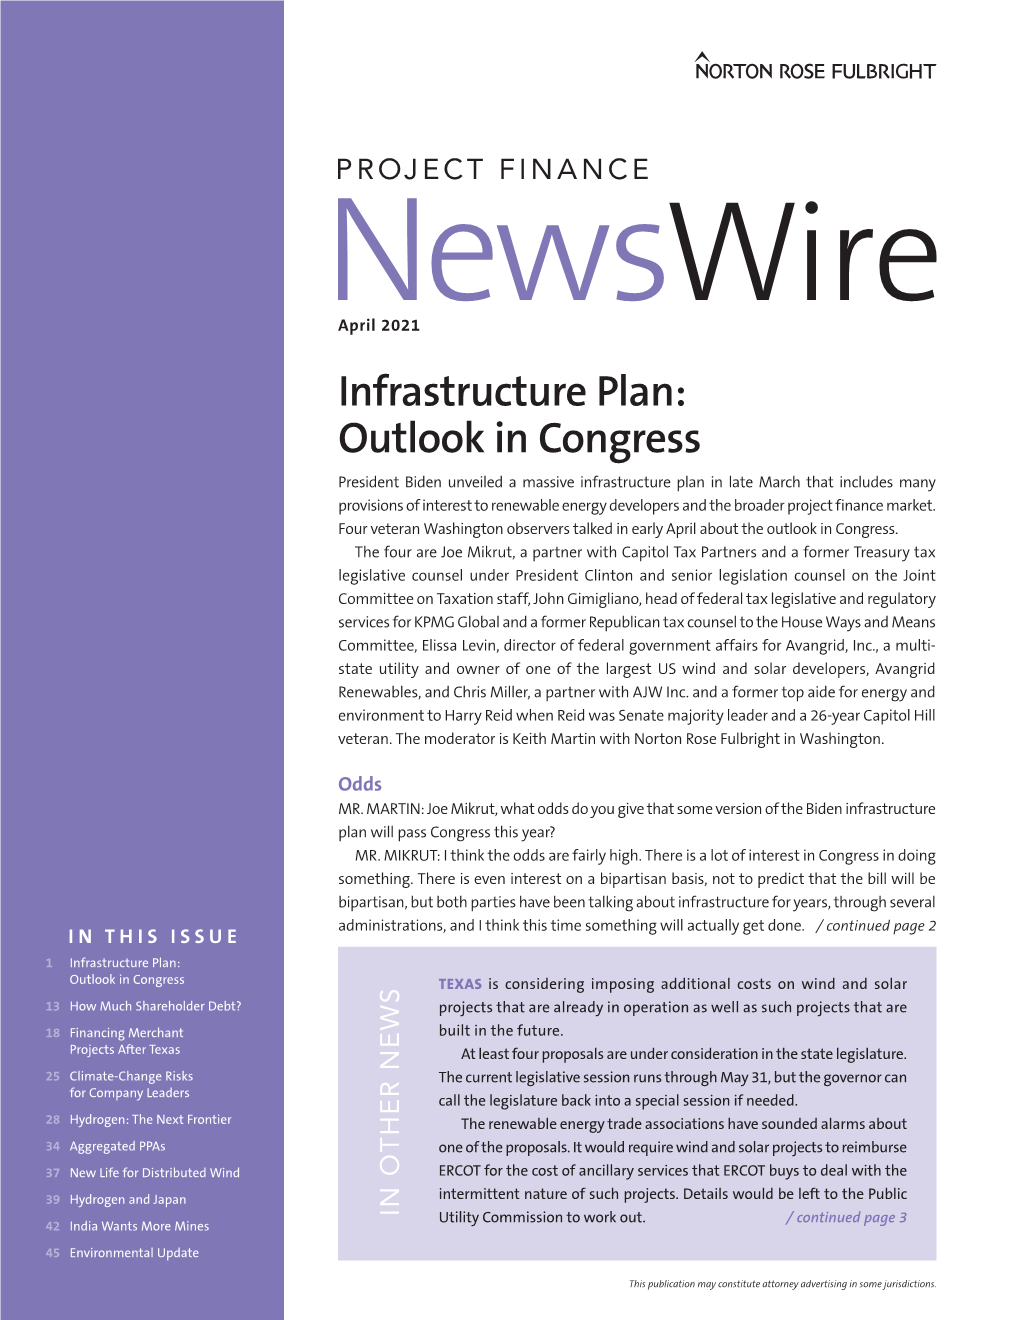 Infrastructure Plan: Outlook in Congress